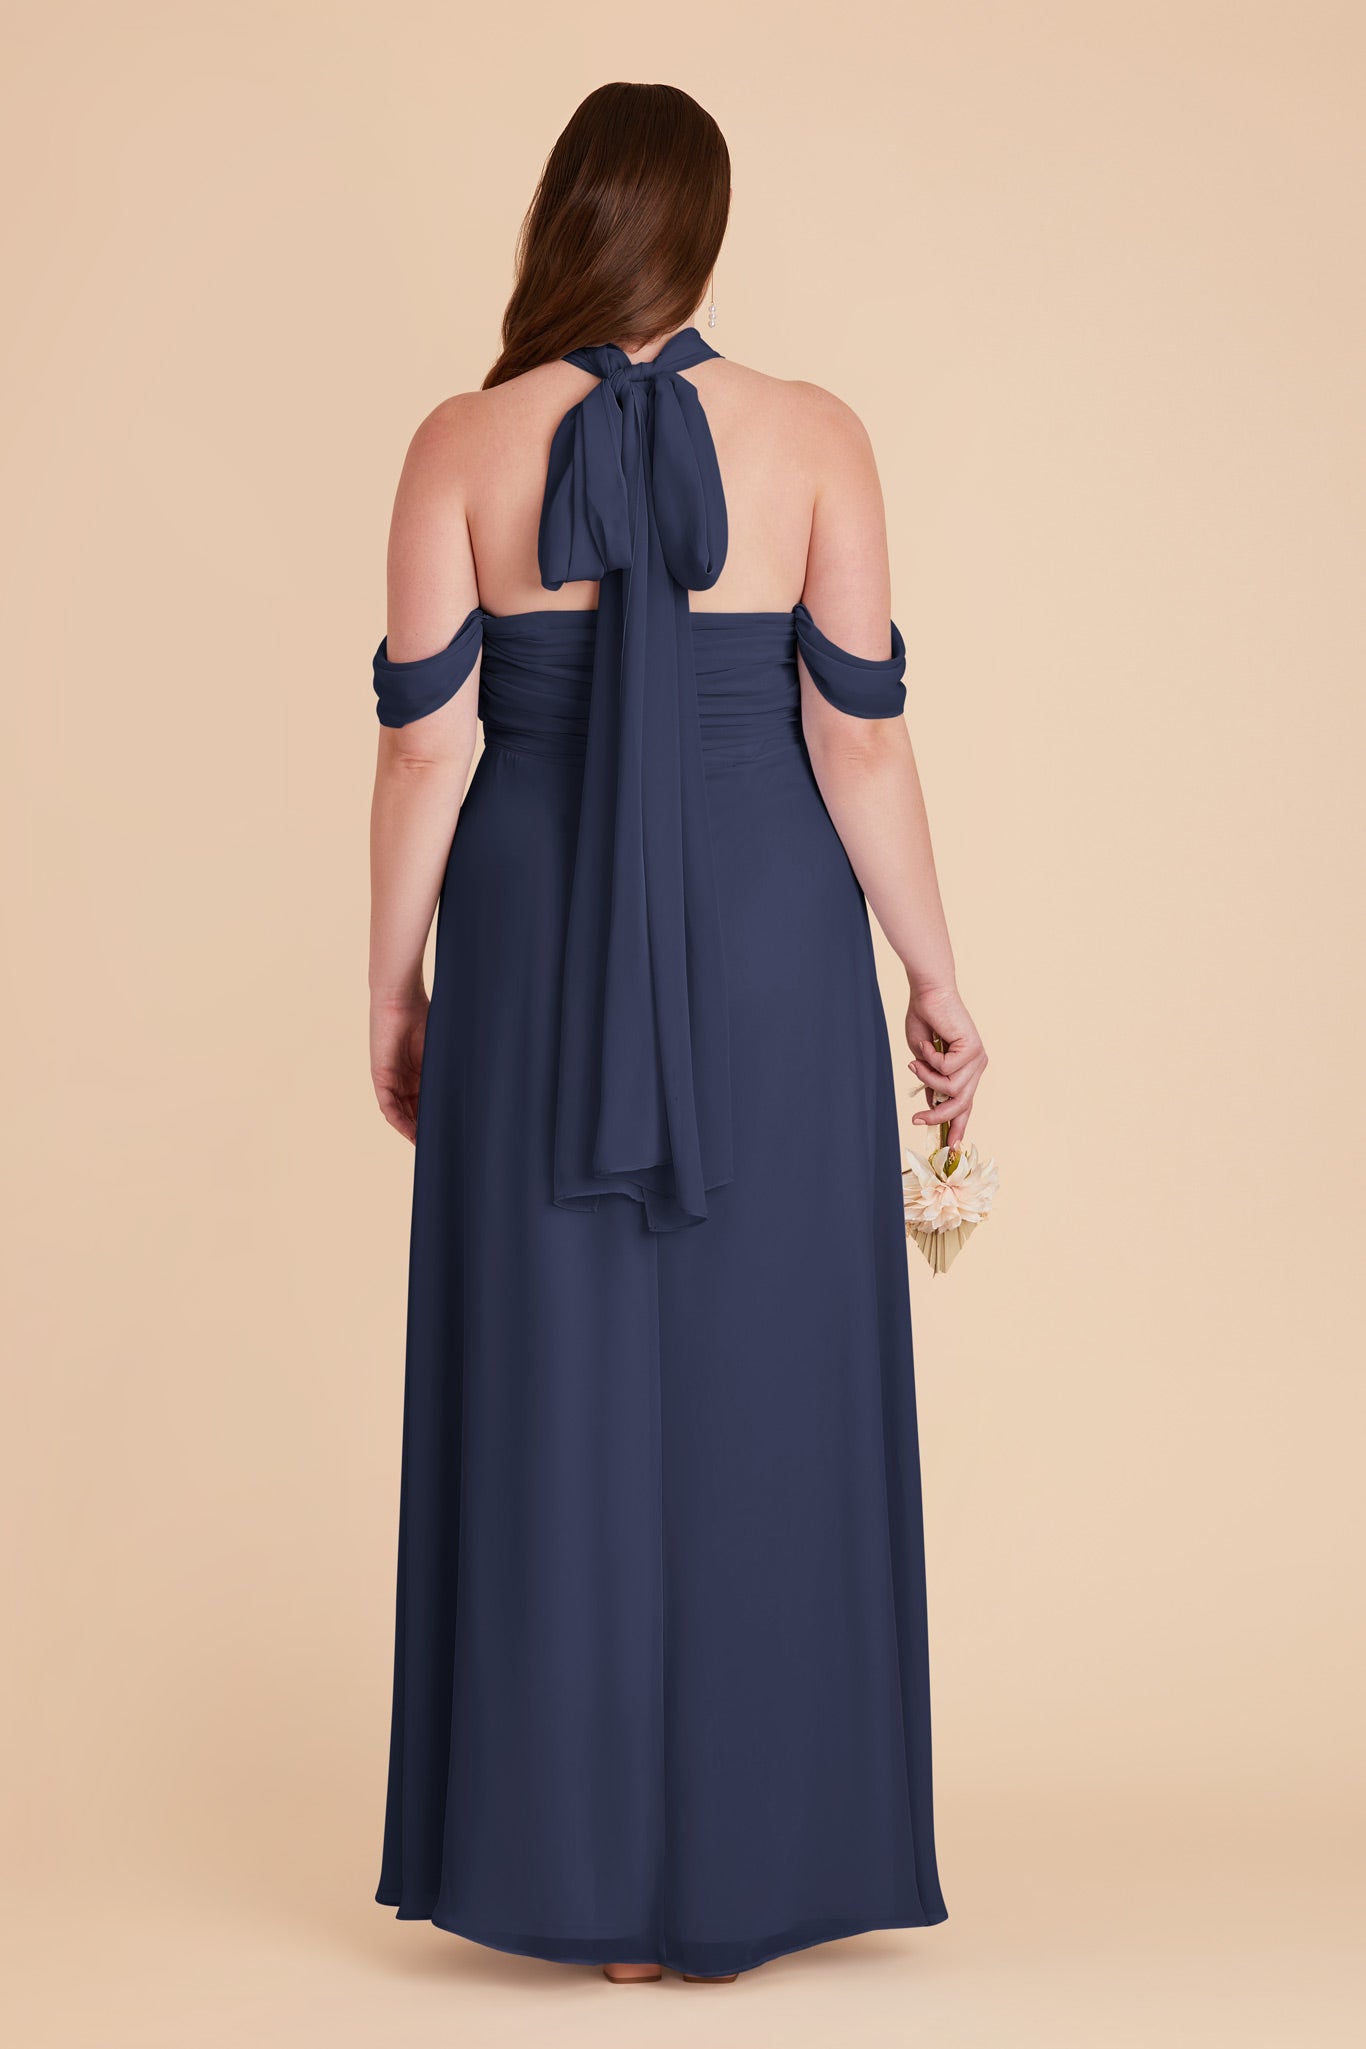 Slate Blue Cara Chiffon Dress by Birdy Grey